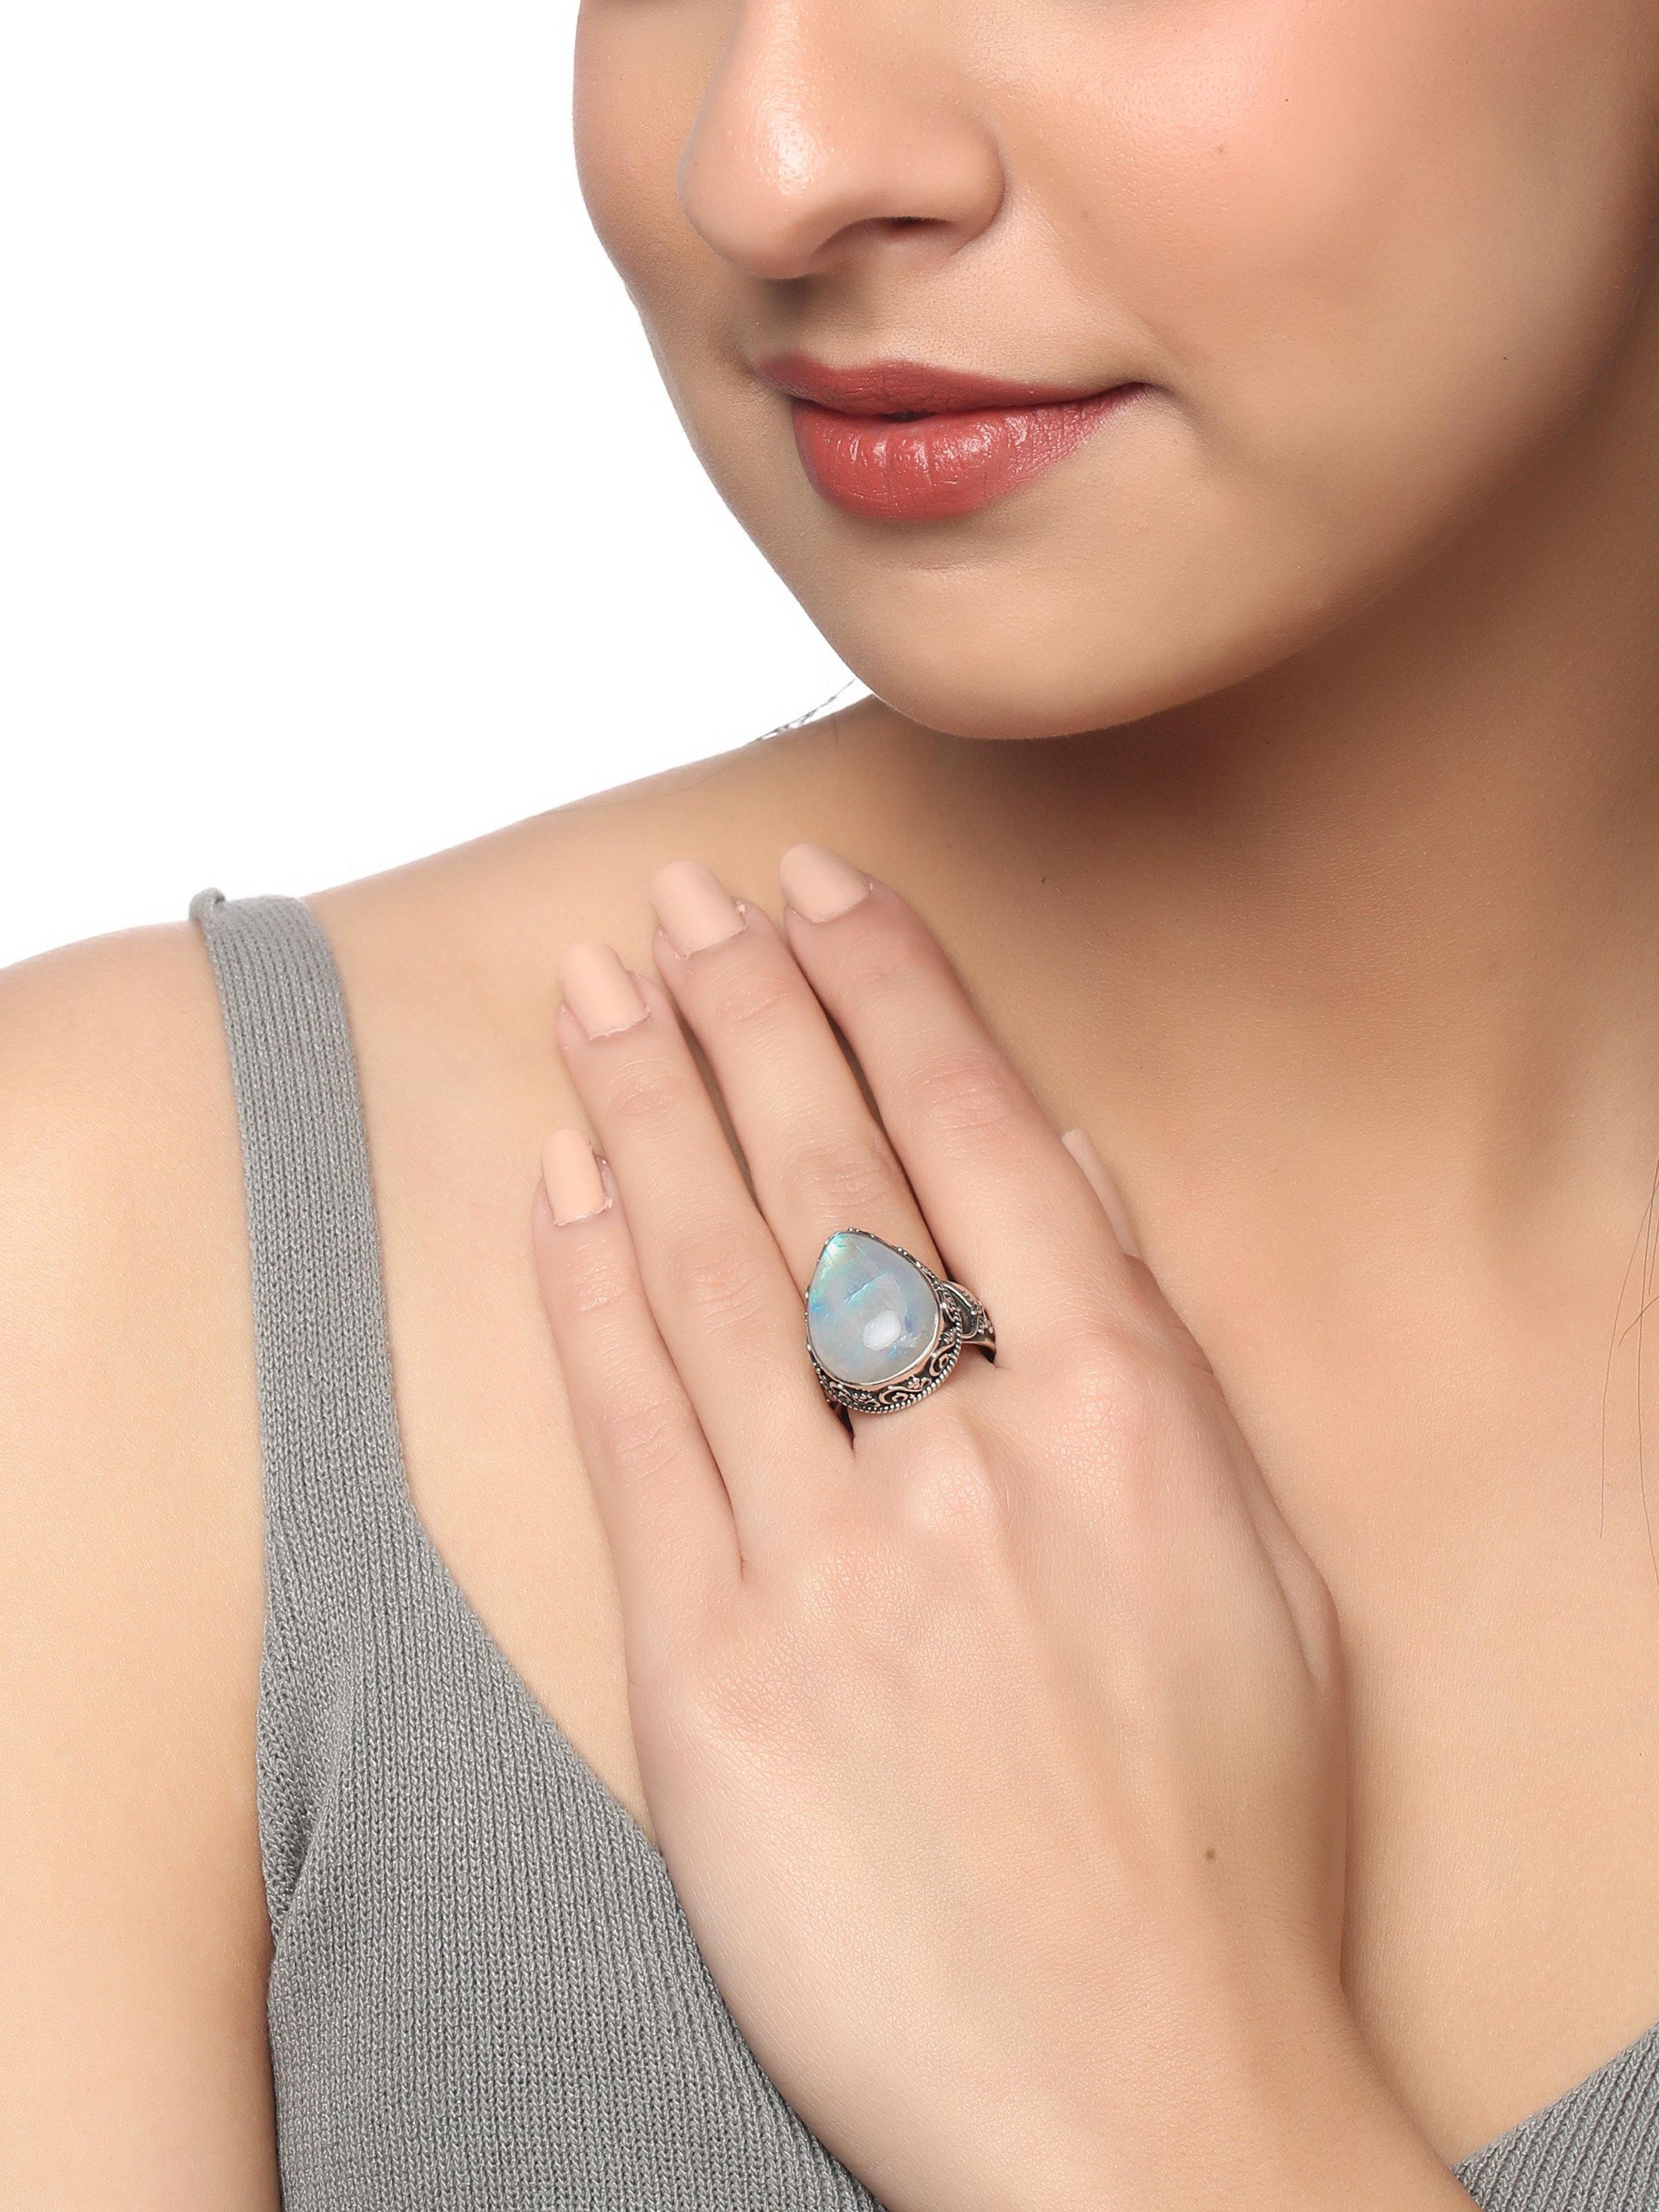 Rainbow Moonstone Ring Solid 925 Sterling Silver Jewelry - YoTreasure